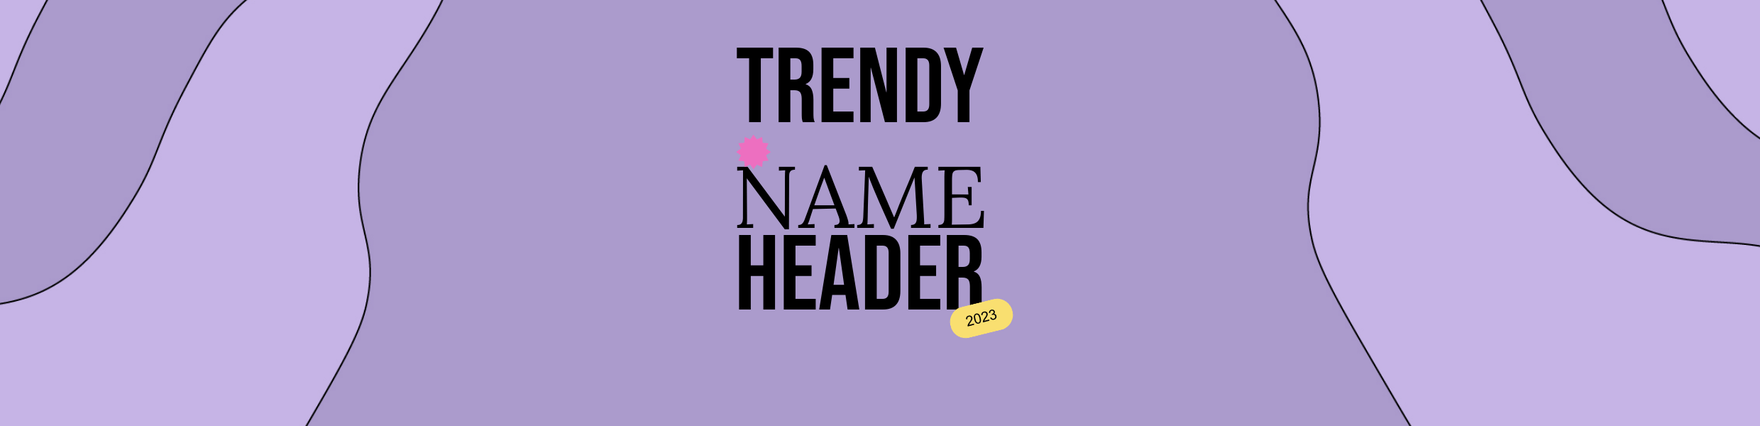 Trendy Name Header Template